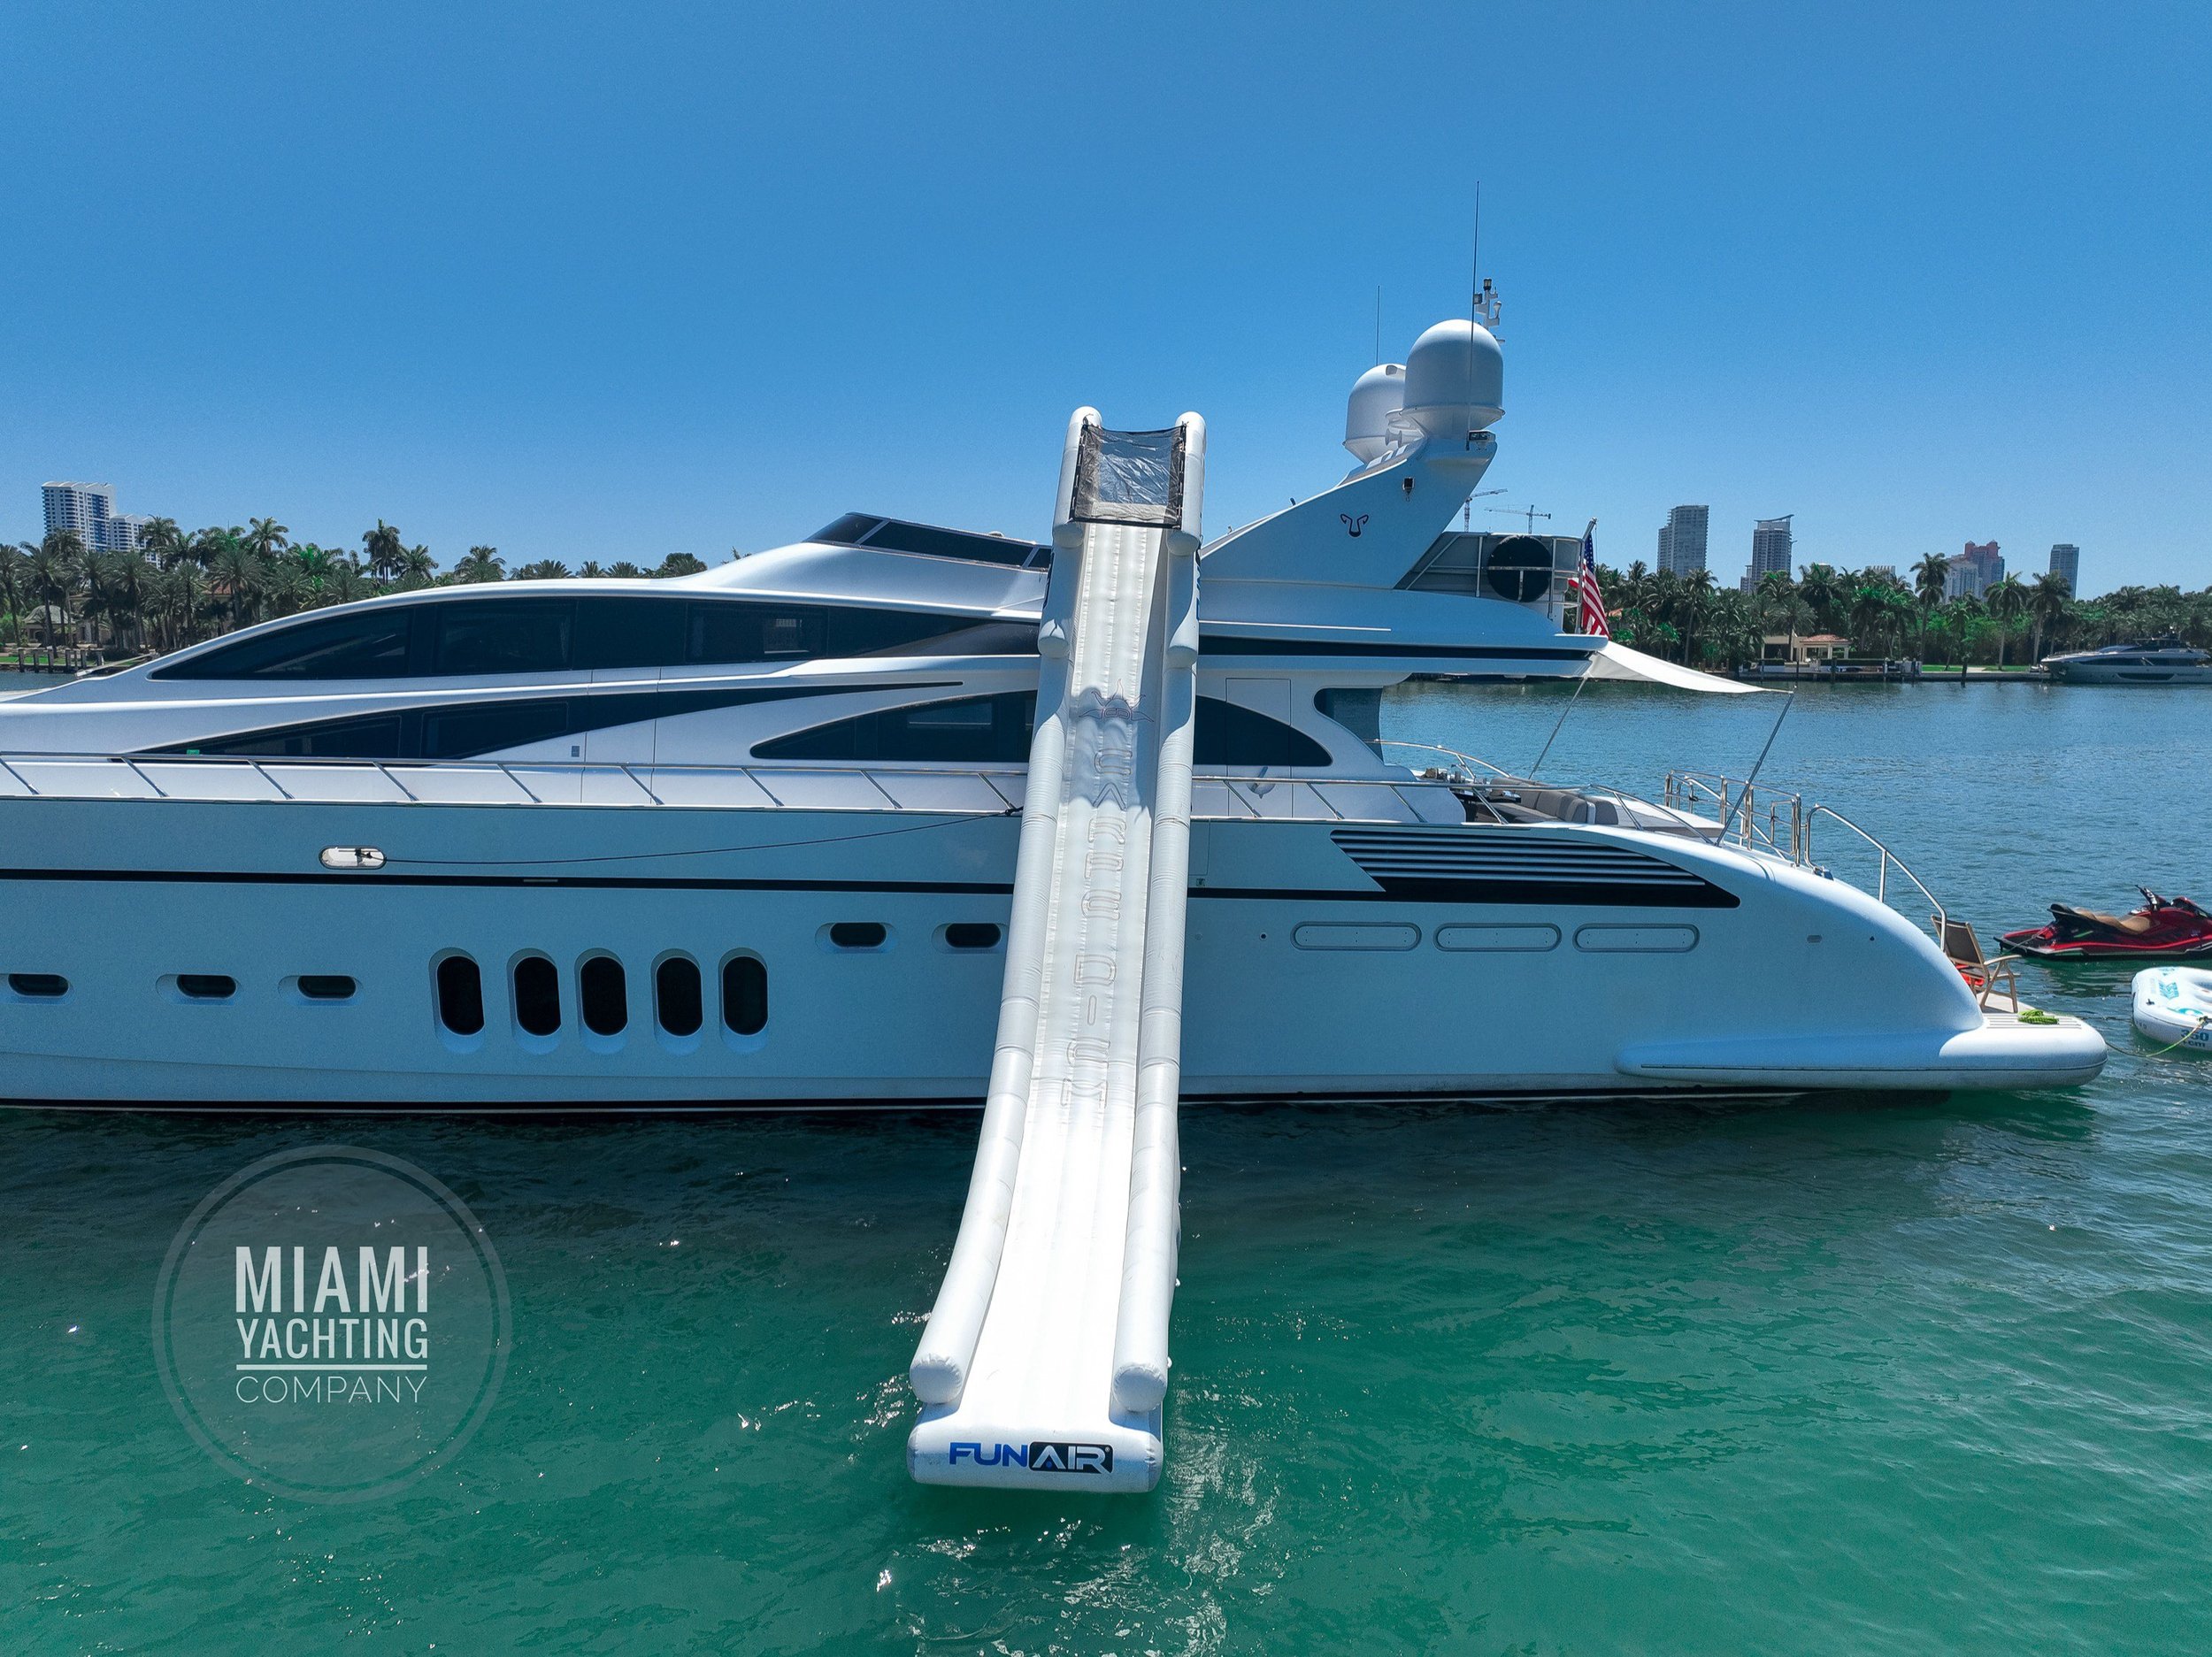 Miami_Yachting_Company_105_Leopard_Flybridge23.jpg